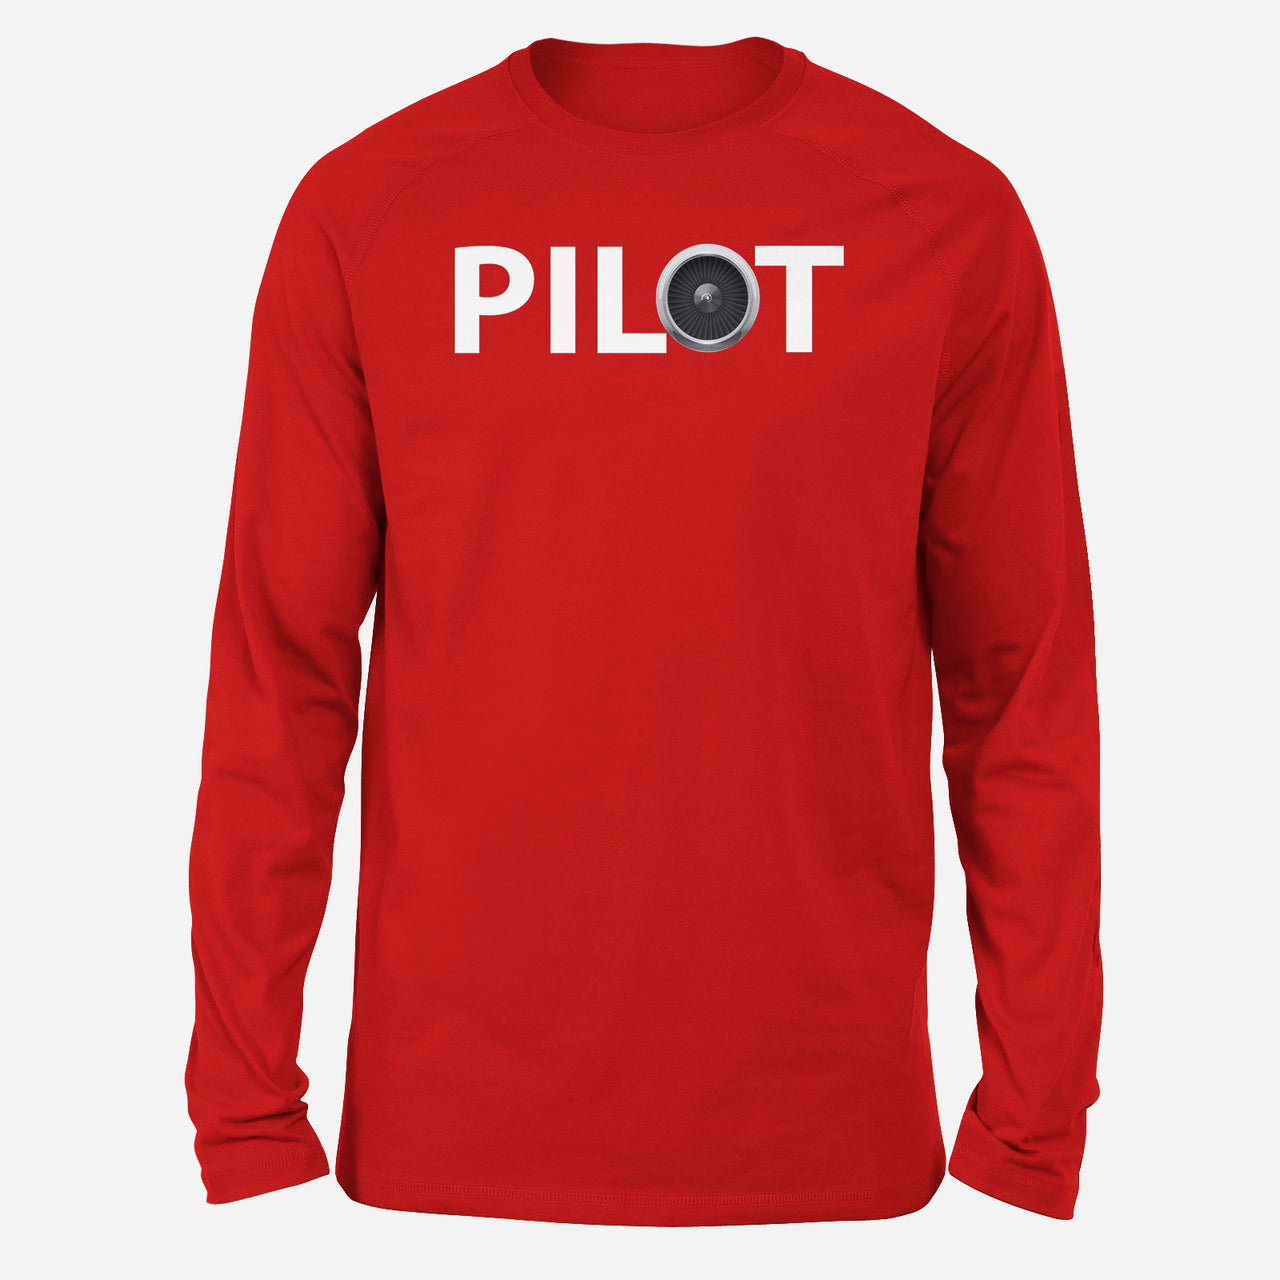 Pilot & Jet Engine Designed Long-Sleeve T-Shirts